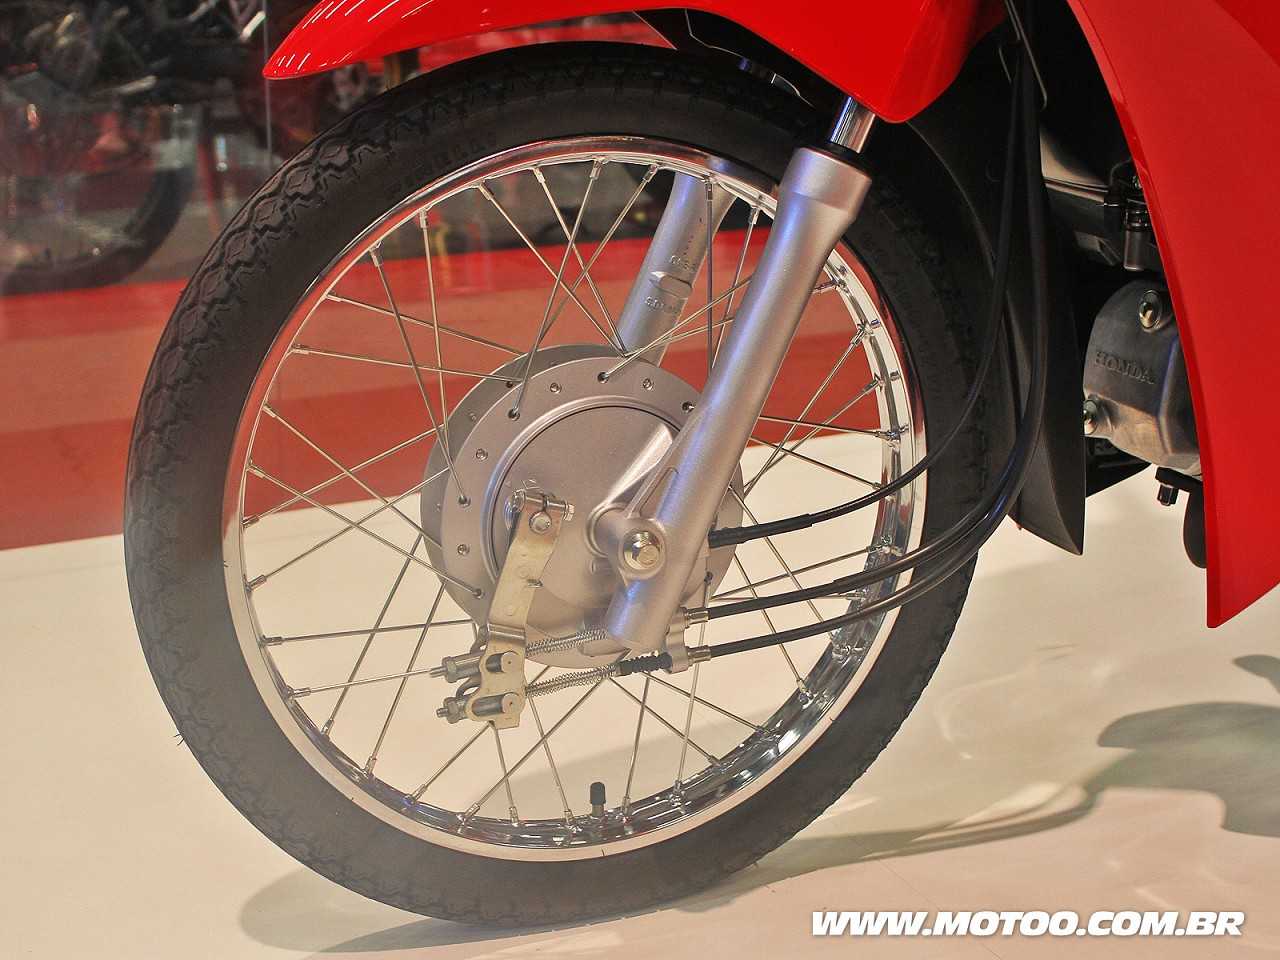 HondaBiz 110i 2018 - rodas